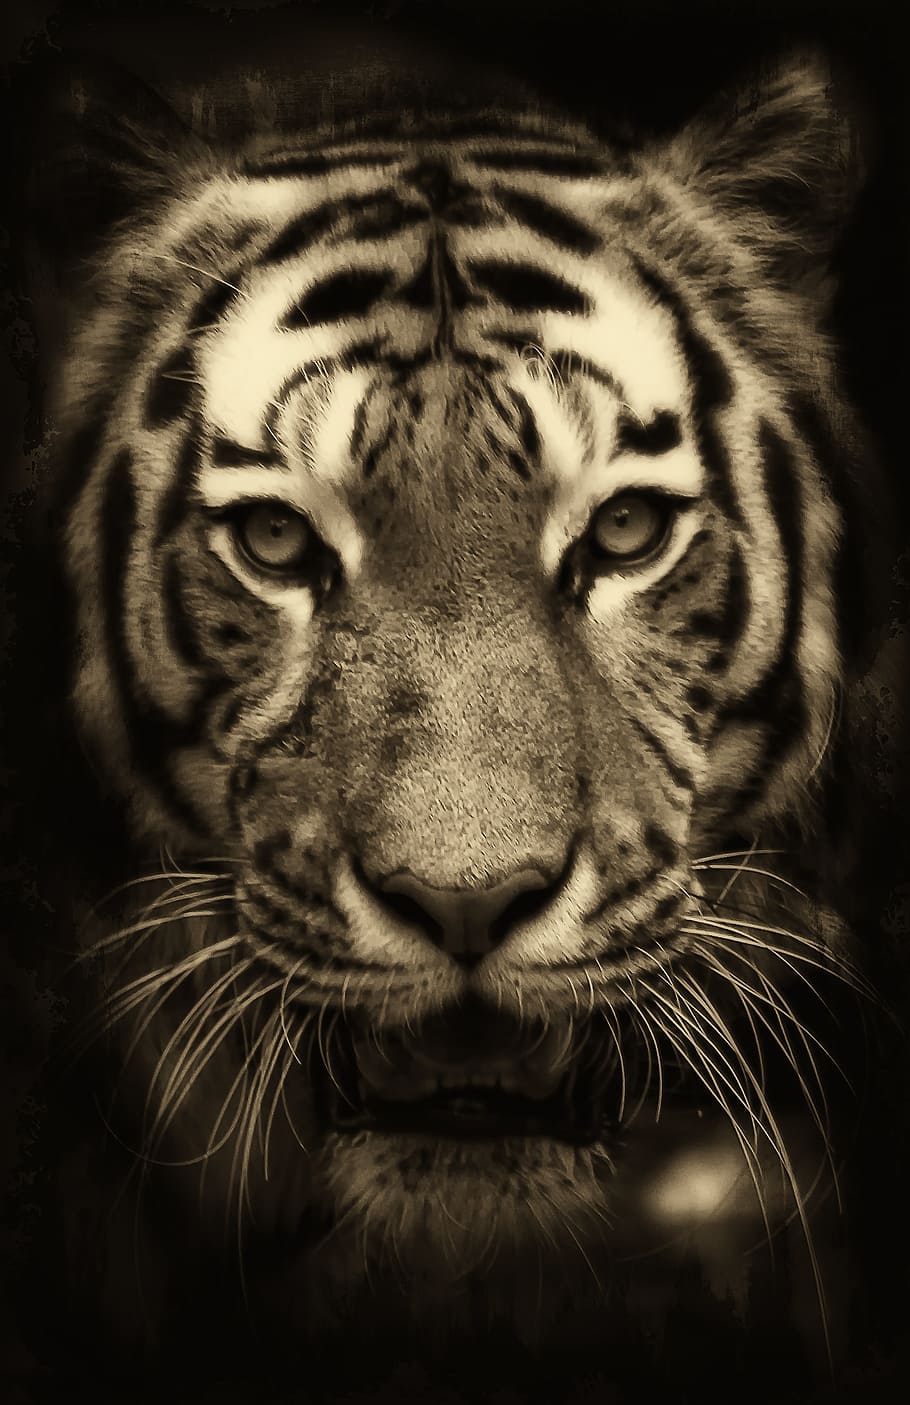 tiger, africa, purry, zoo, predator, wildlife, fur, animal portrait, savannah, dangerous